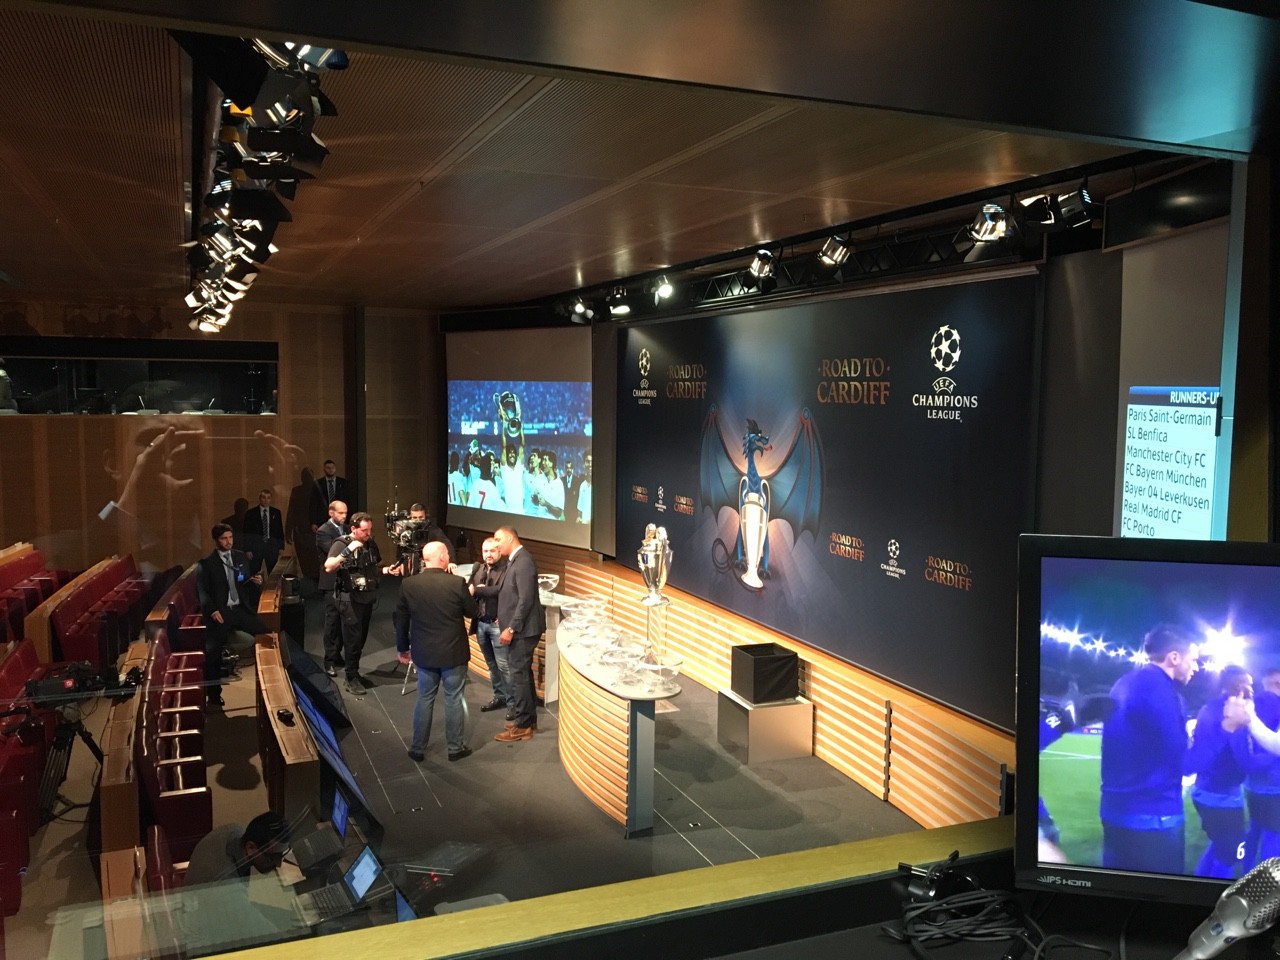 TRỰC TIẾP: Lễ bốc thăm vòng 1/8 Champions League 2016/17